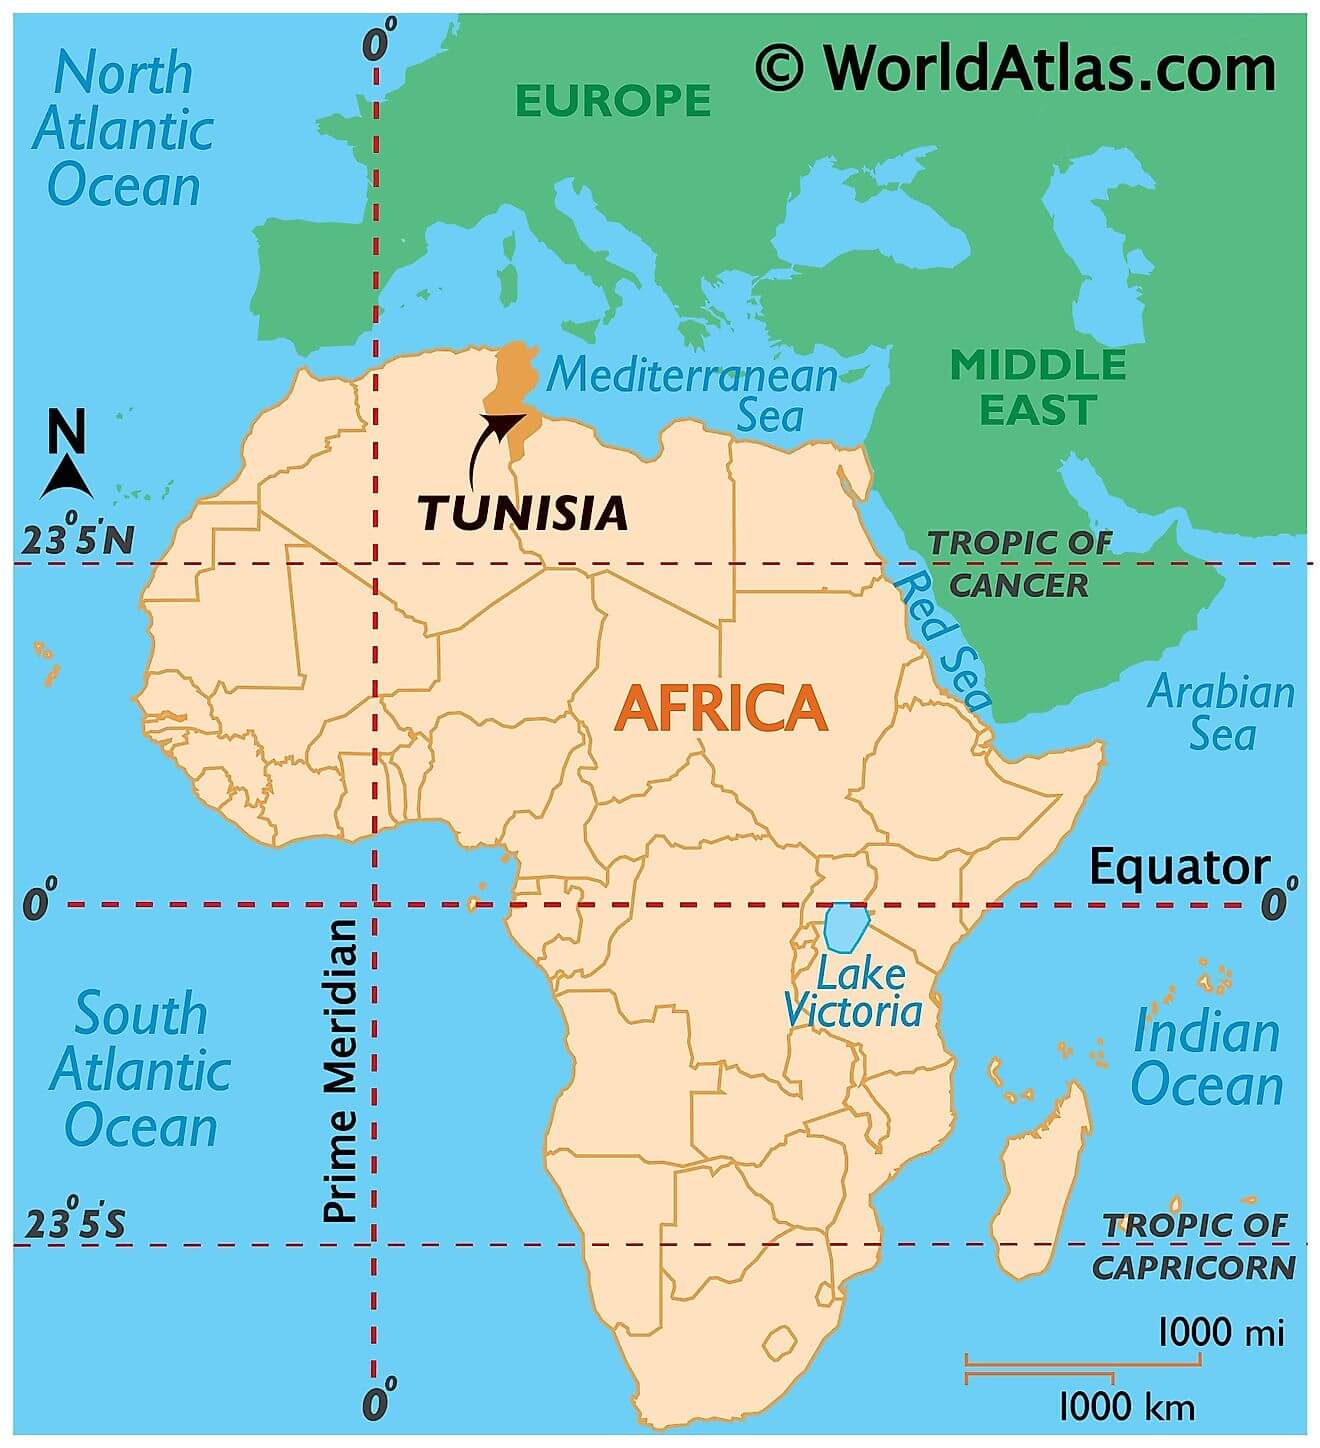 Where is Tunisia?